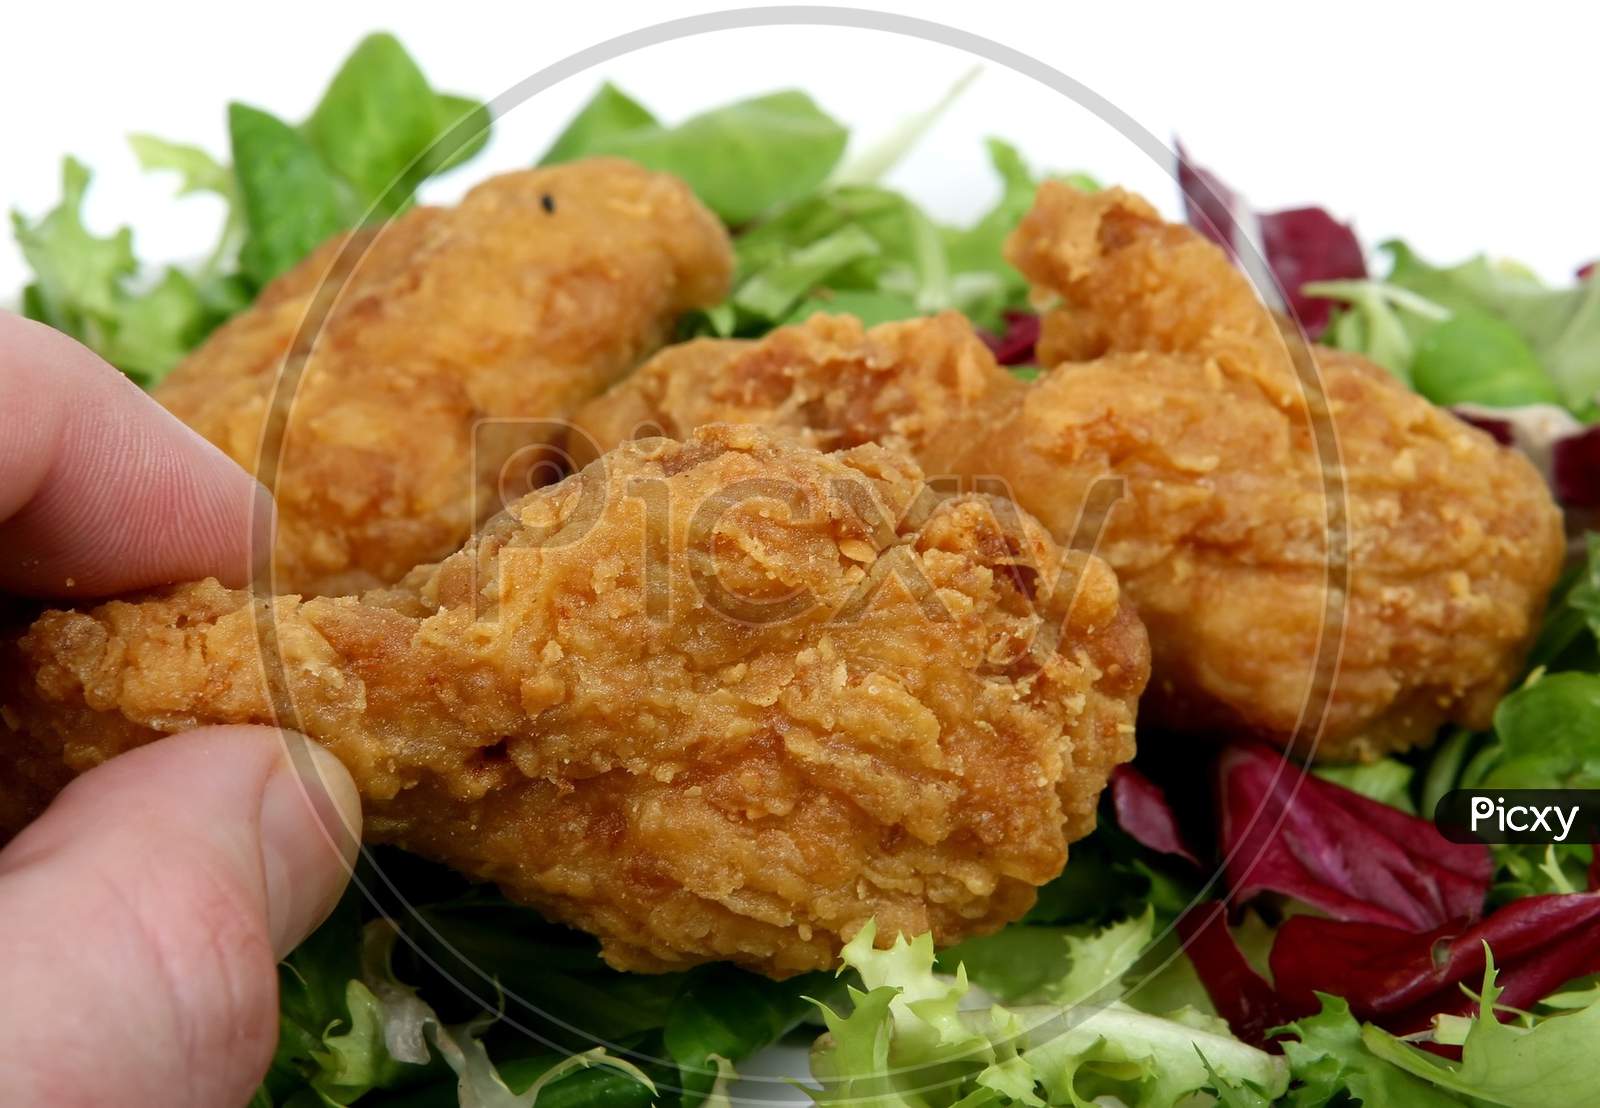 Crispy fried chicken